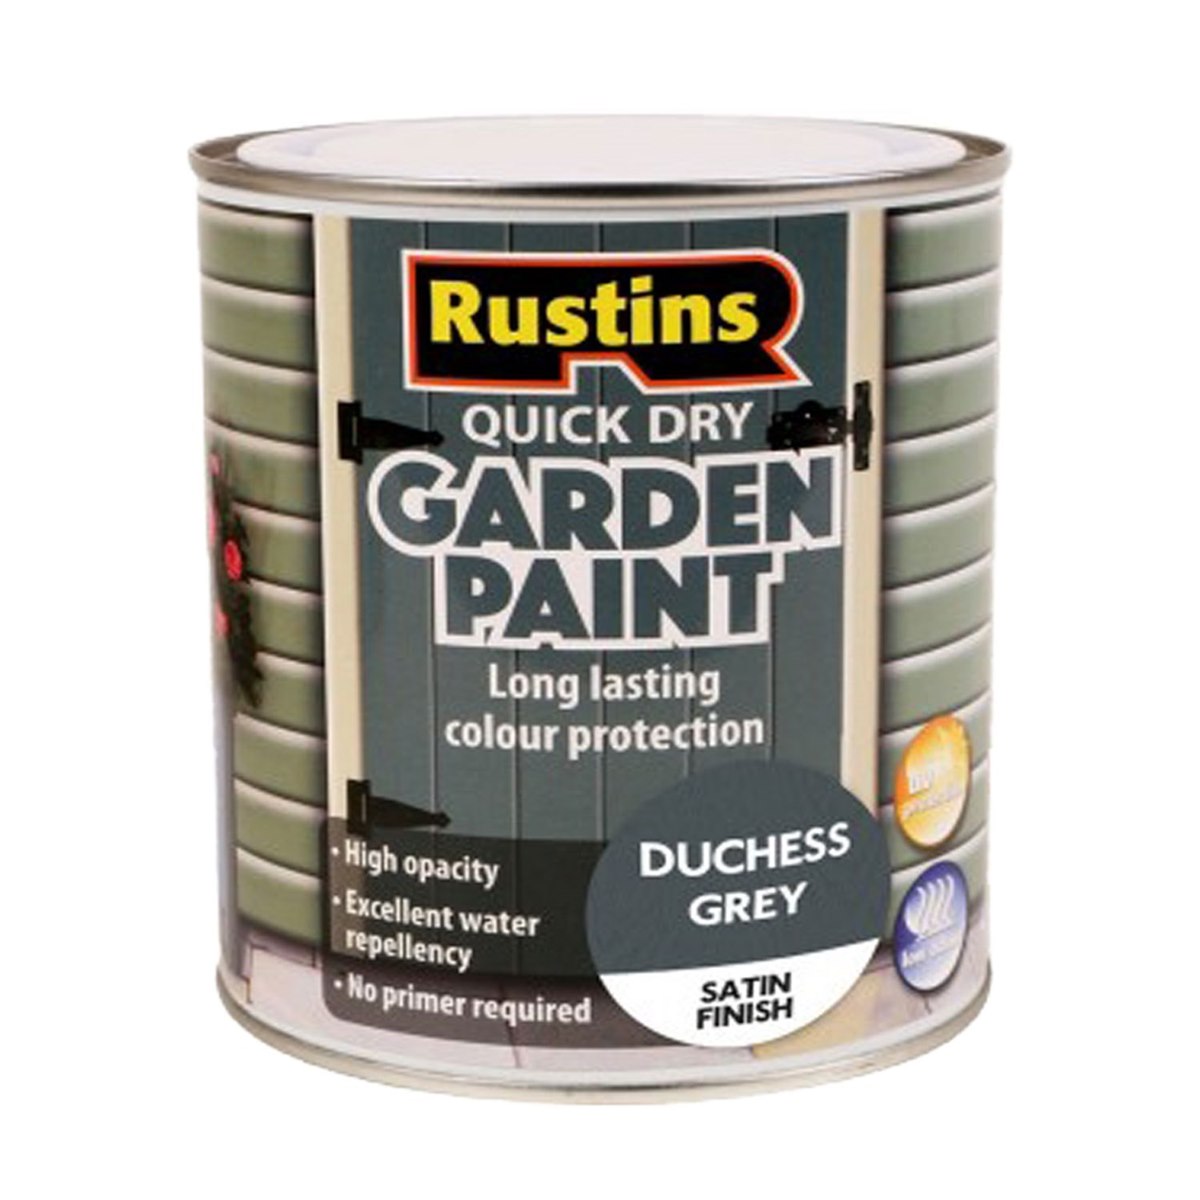 Rustins Quick Dry Garden Paint Satin Finish Duchess Grey